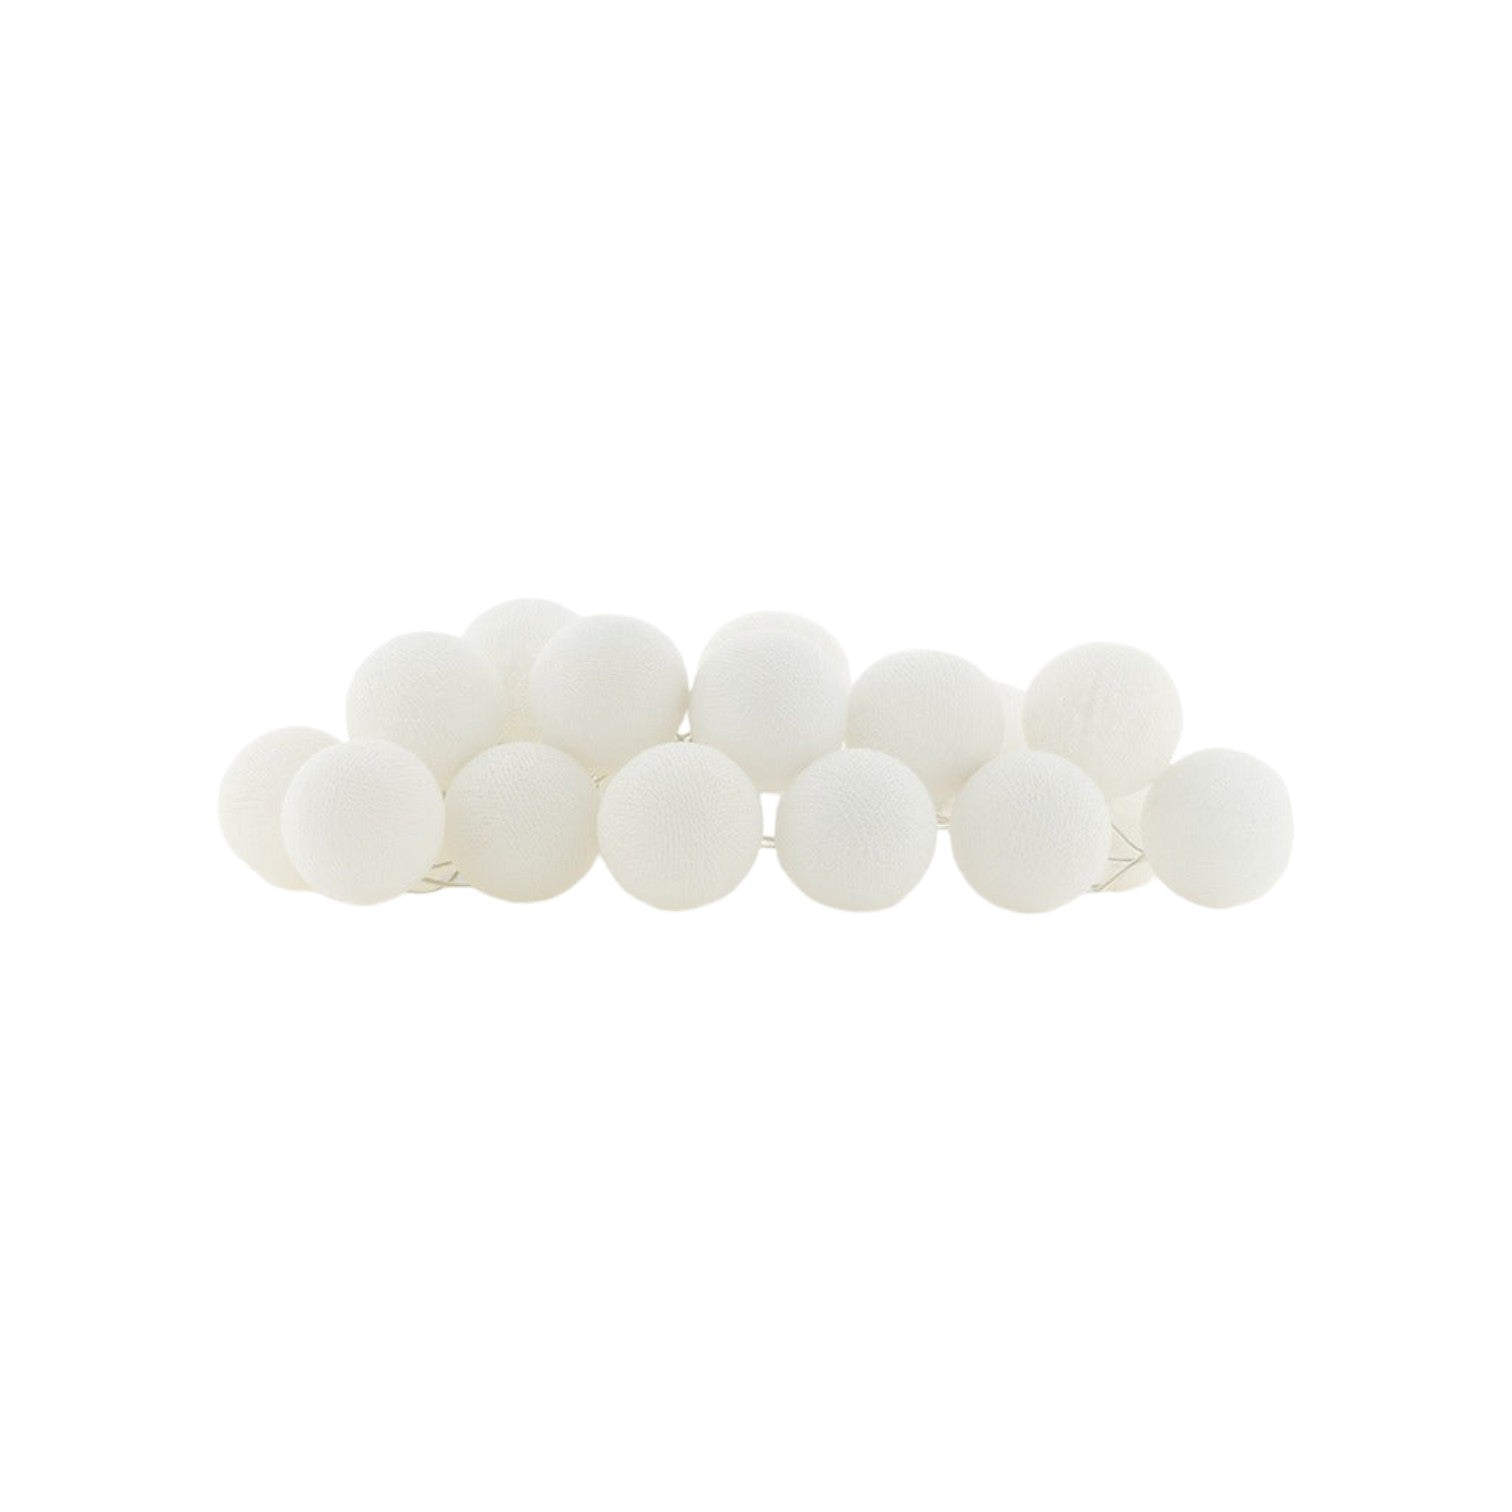 Cotton Ball Lights - Lichtslinger 'Viggo' (20 stuks